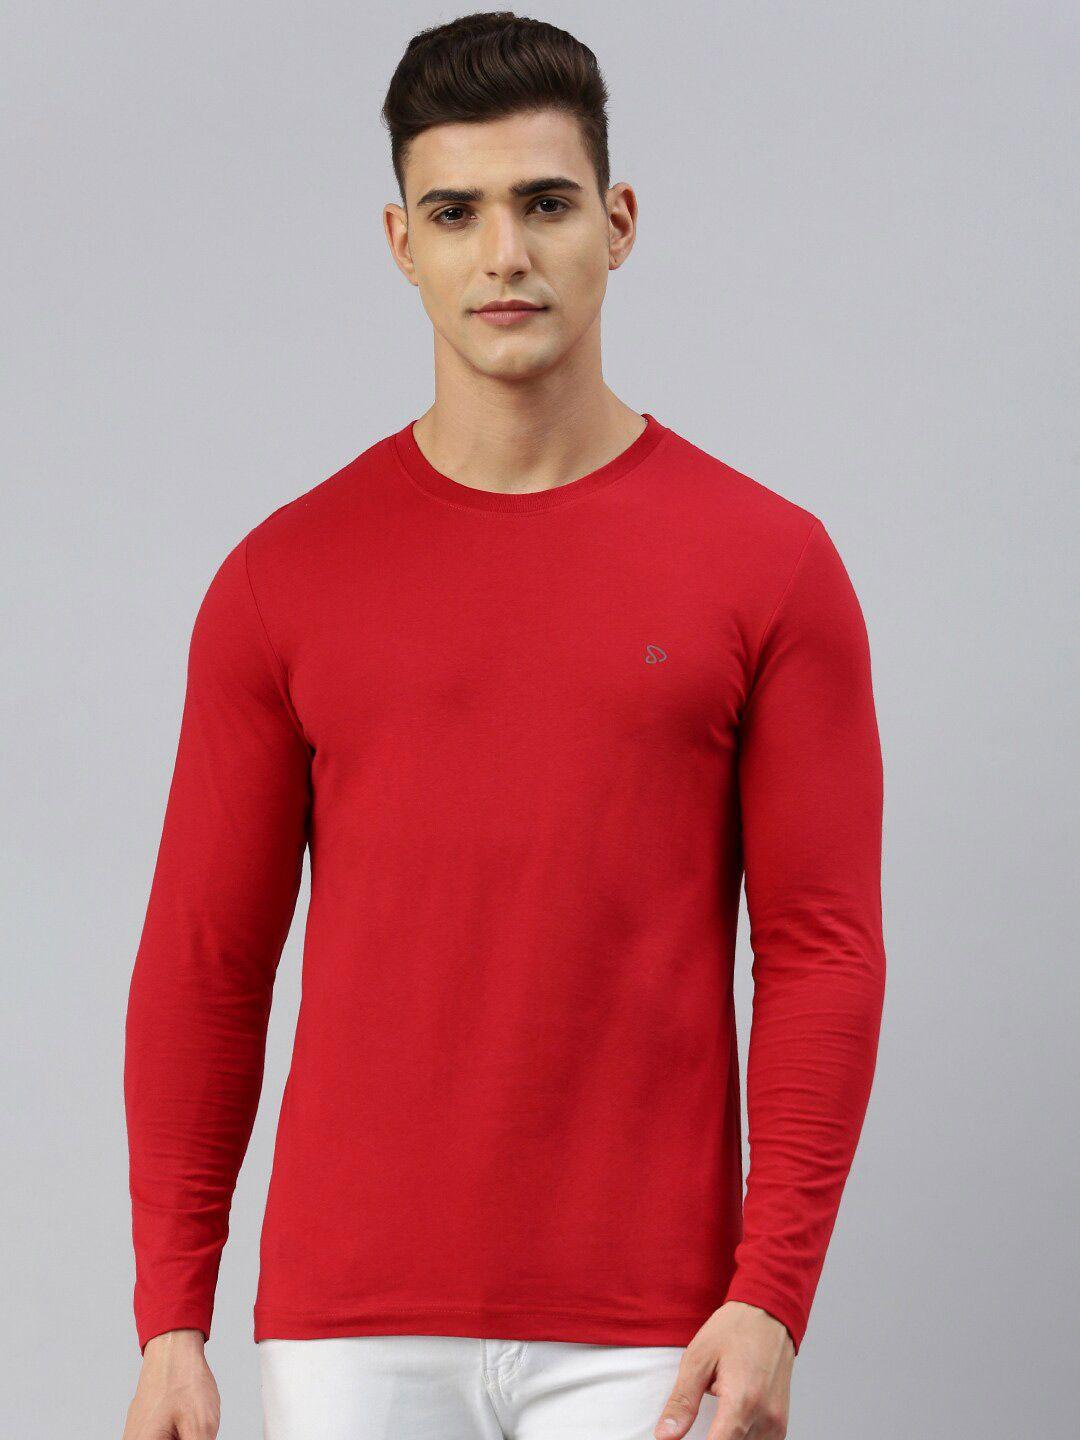 sporto round neck ultralite cotton t-shirt